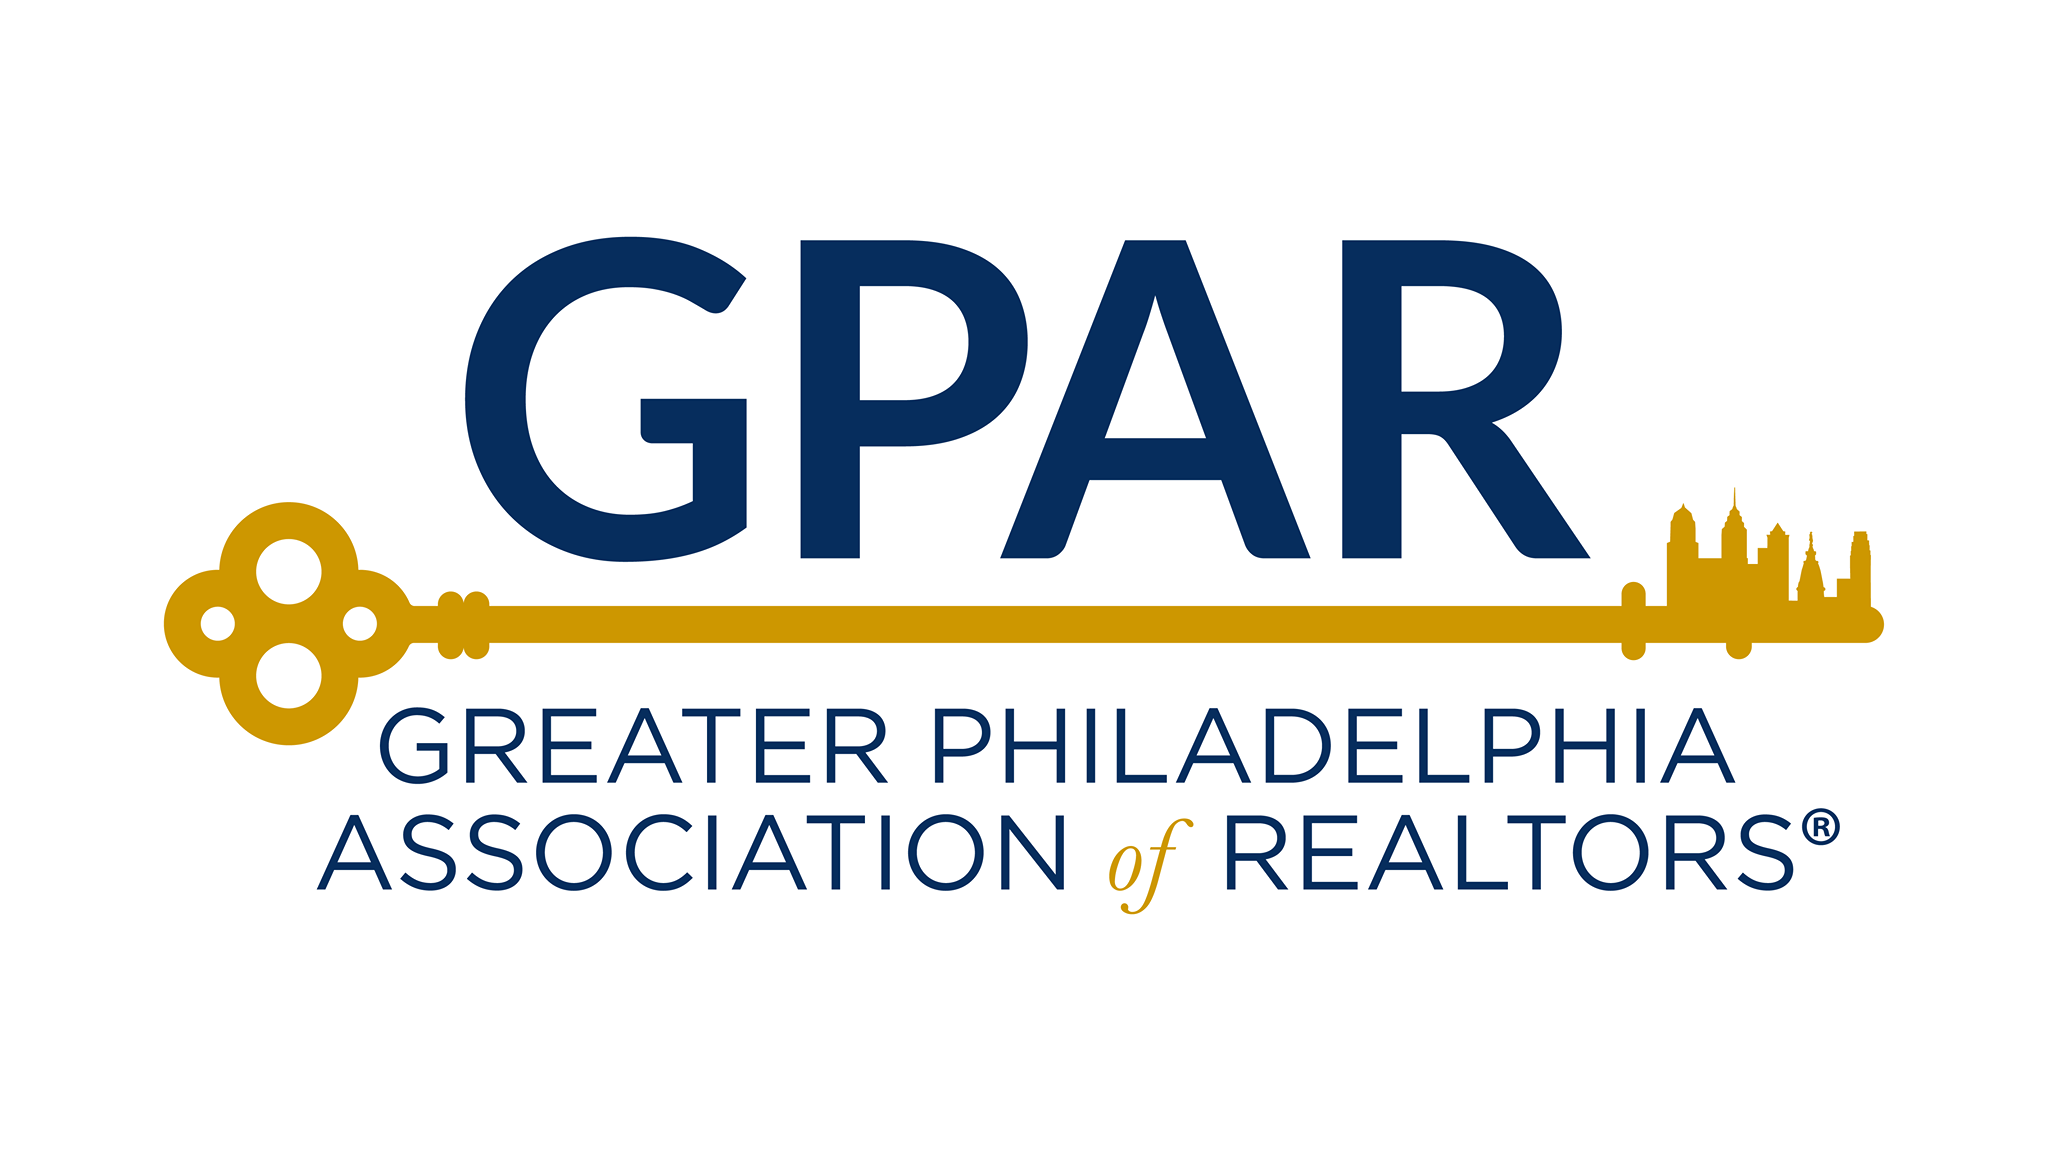 Greater Philadelphia Association of REALTORS®